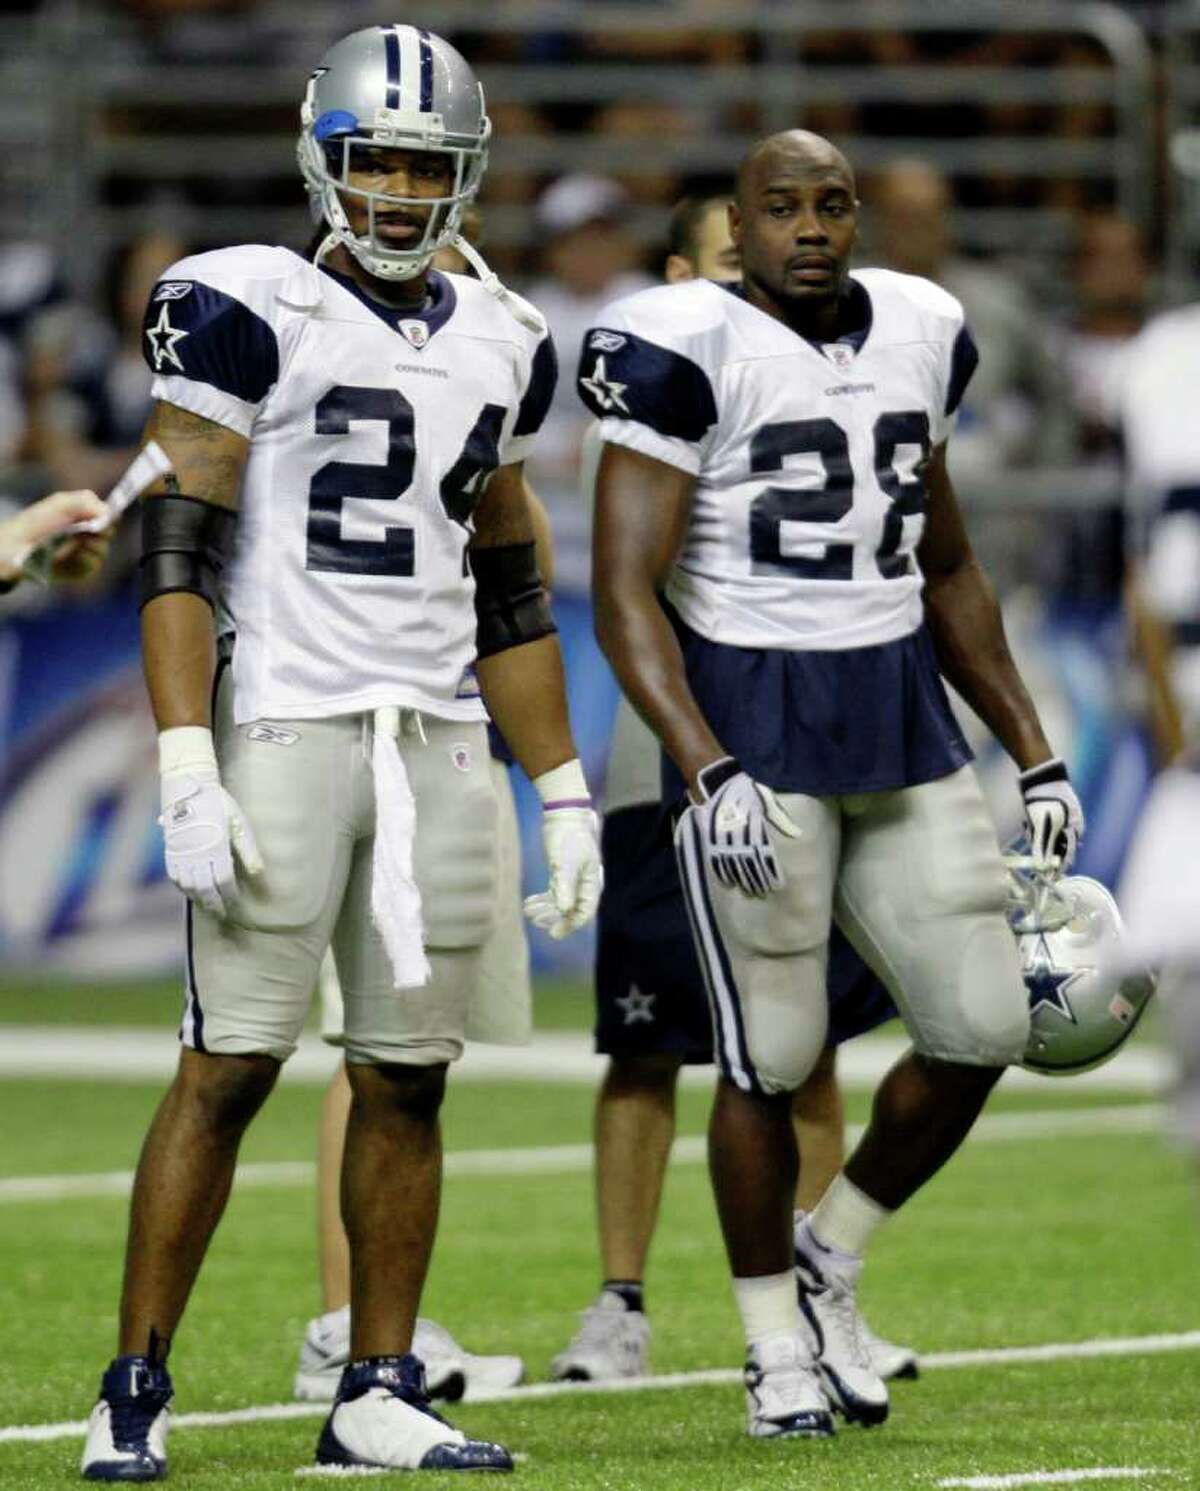 Dallas Cowboys running backs Marion Barber (24) and Felix Jones (28) attend the team's NFL football training camp in San Antonio, Friday, Aug. 7, 2009.